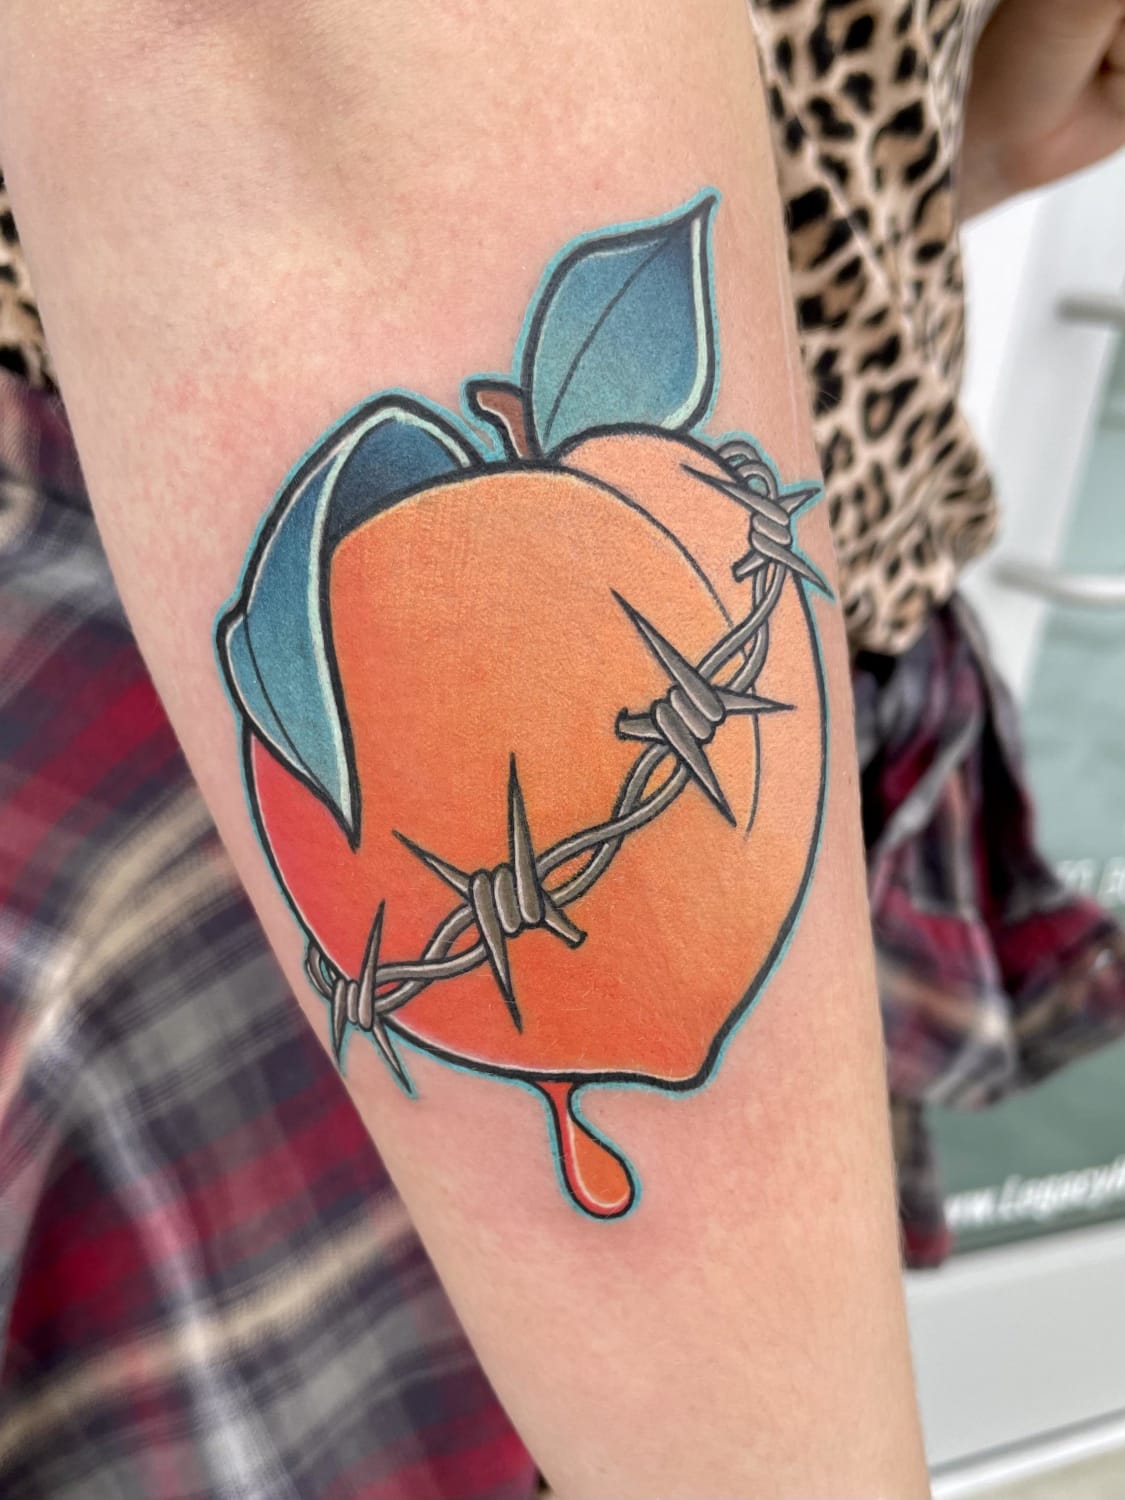 Peachy by Adrián Mateo (@StickerTats) St. Joseph, MI